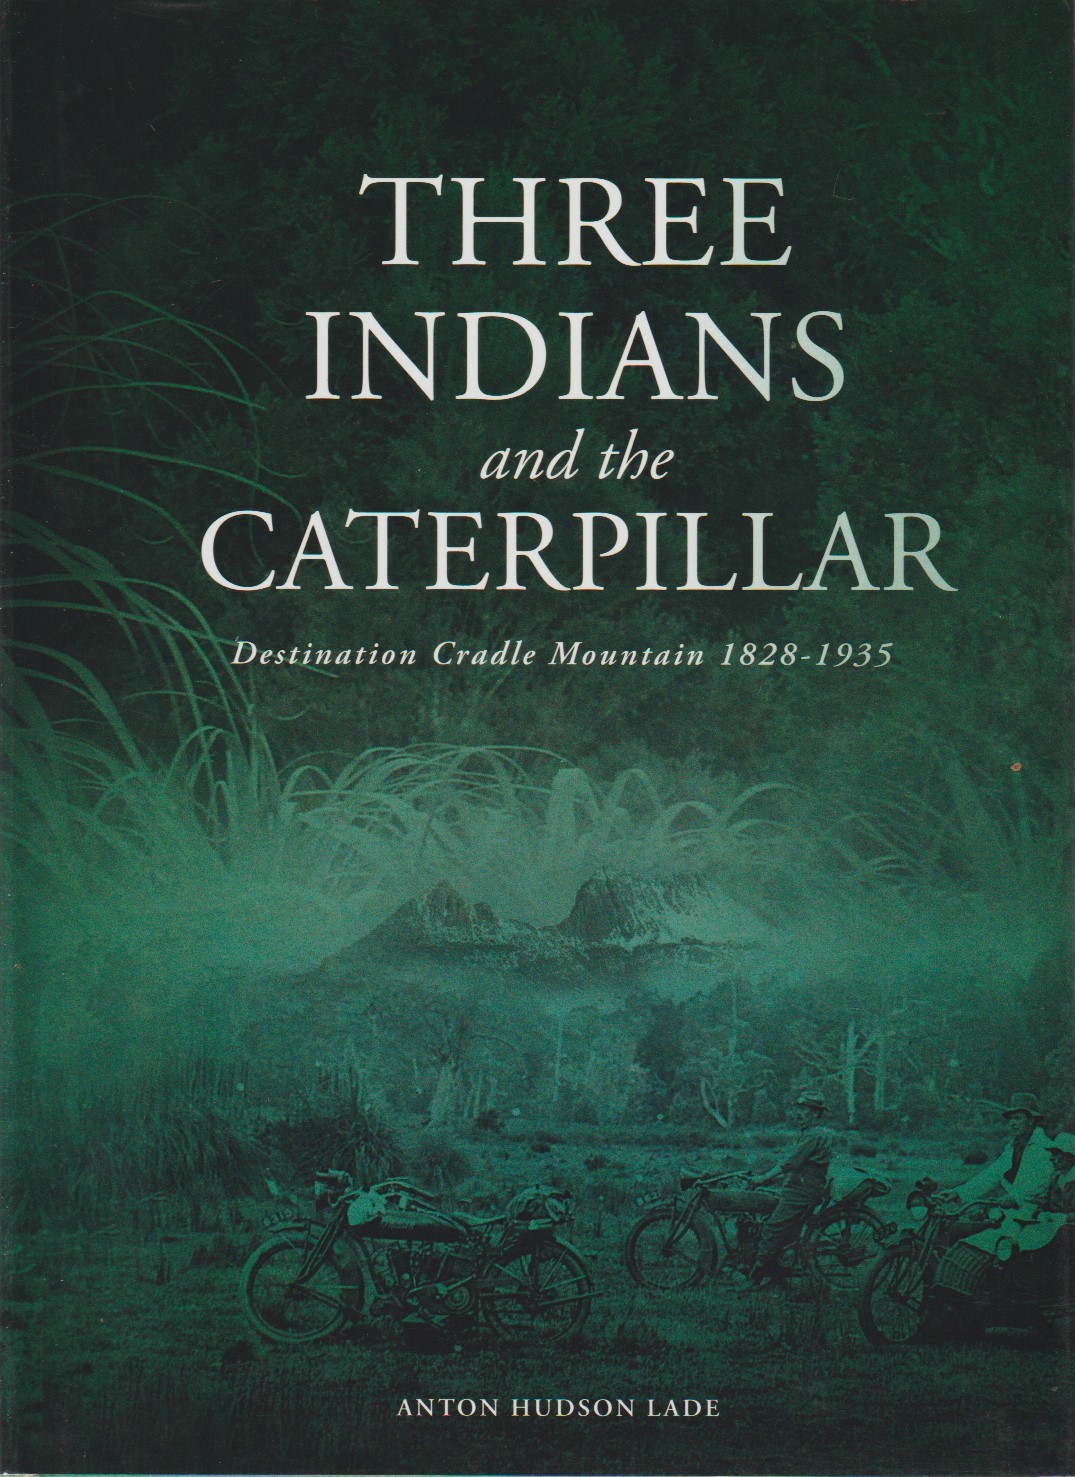 Three Indians and the Caterpillar - Destination Cradle Mt 1828-1935